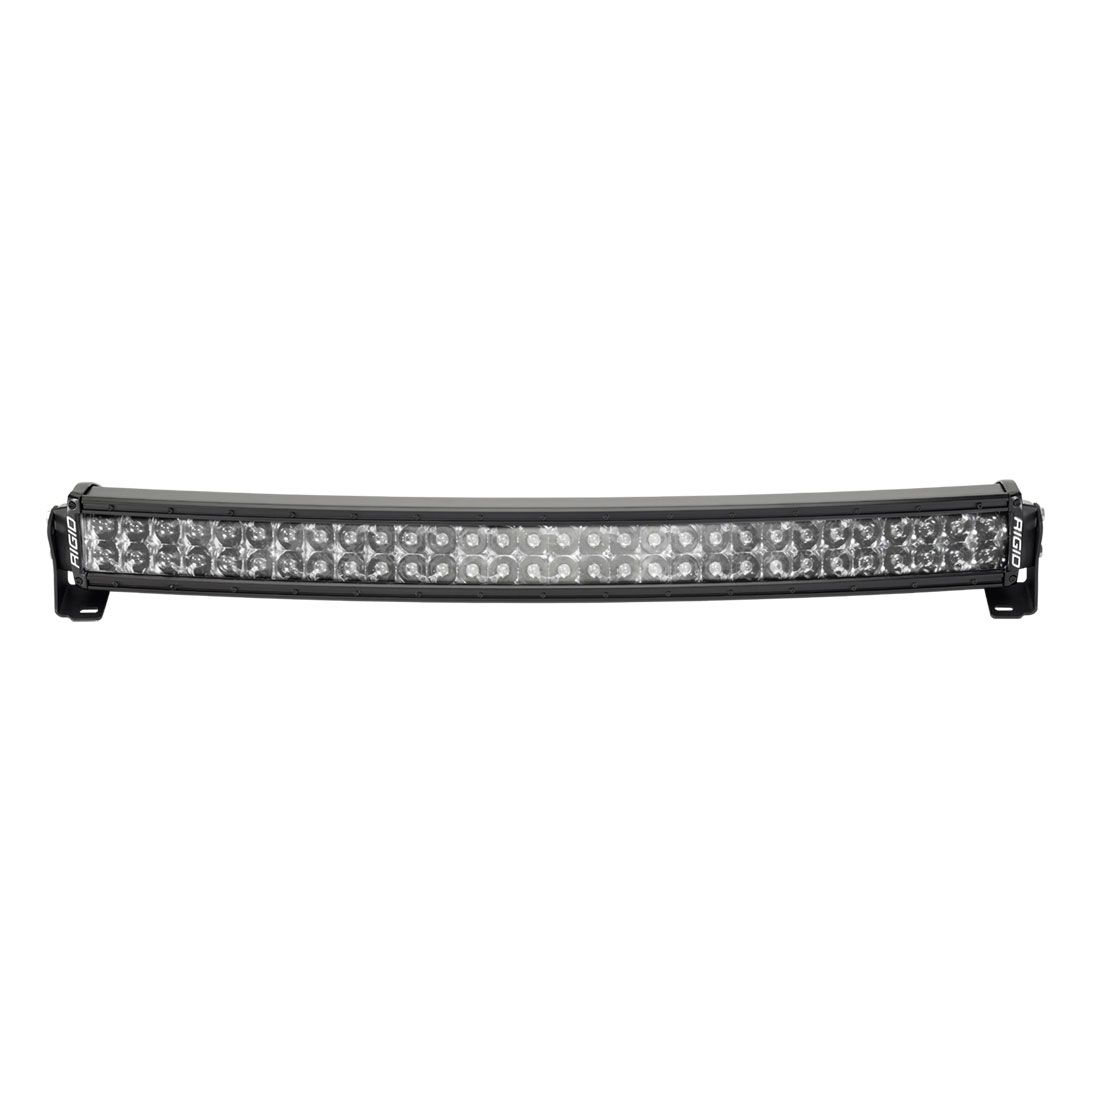 RIGID® SR-Series 32” Combo LED Light Bar